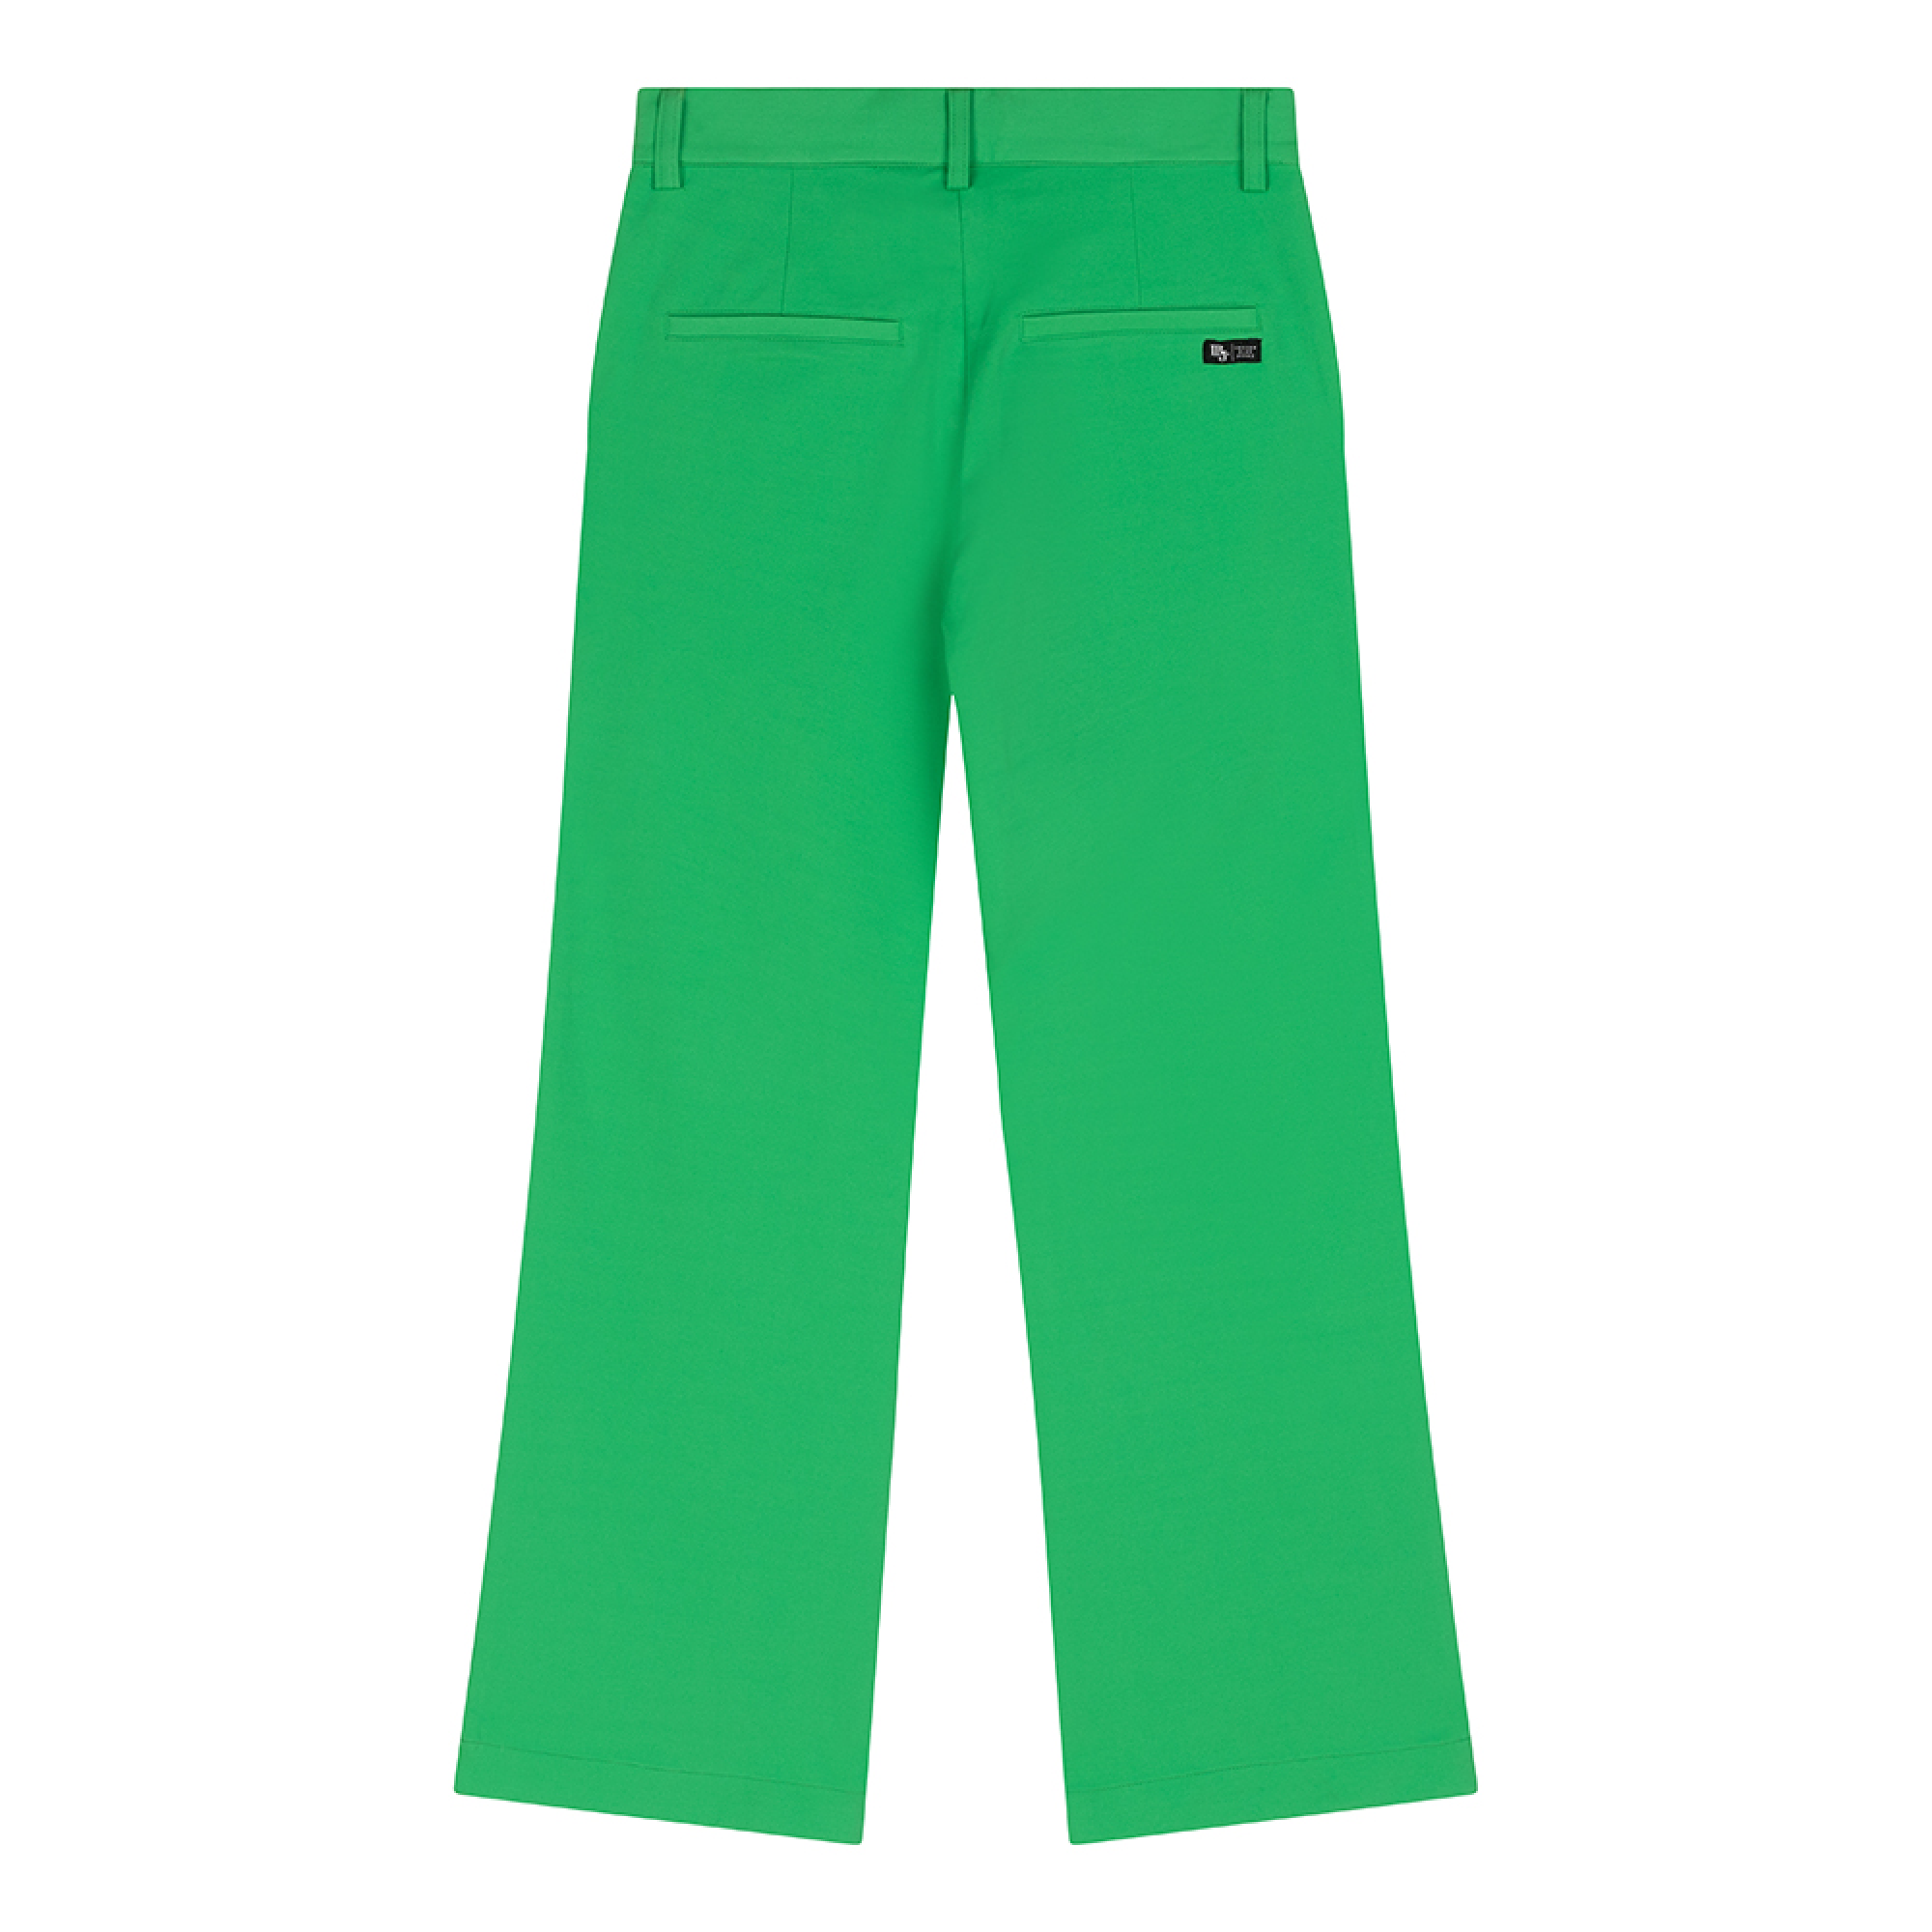 Meisjes Wide Pants Pantalon van Indian Blue Jeans in de kleur Ming green in maat 176.